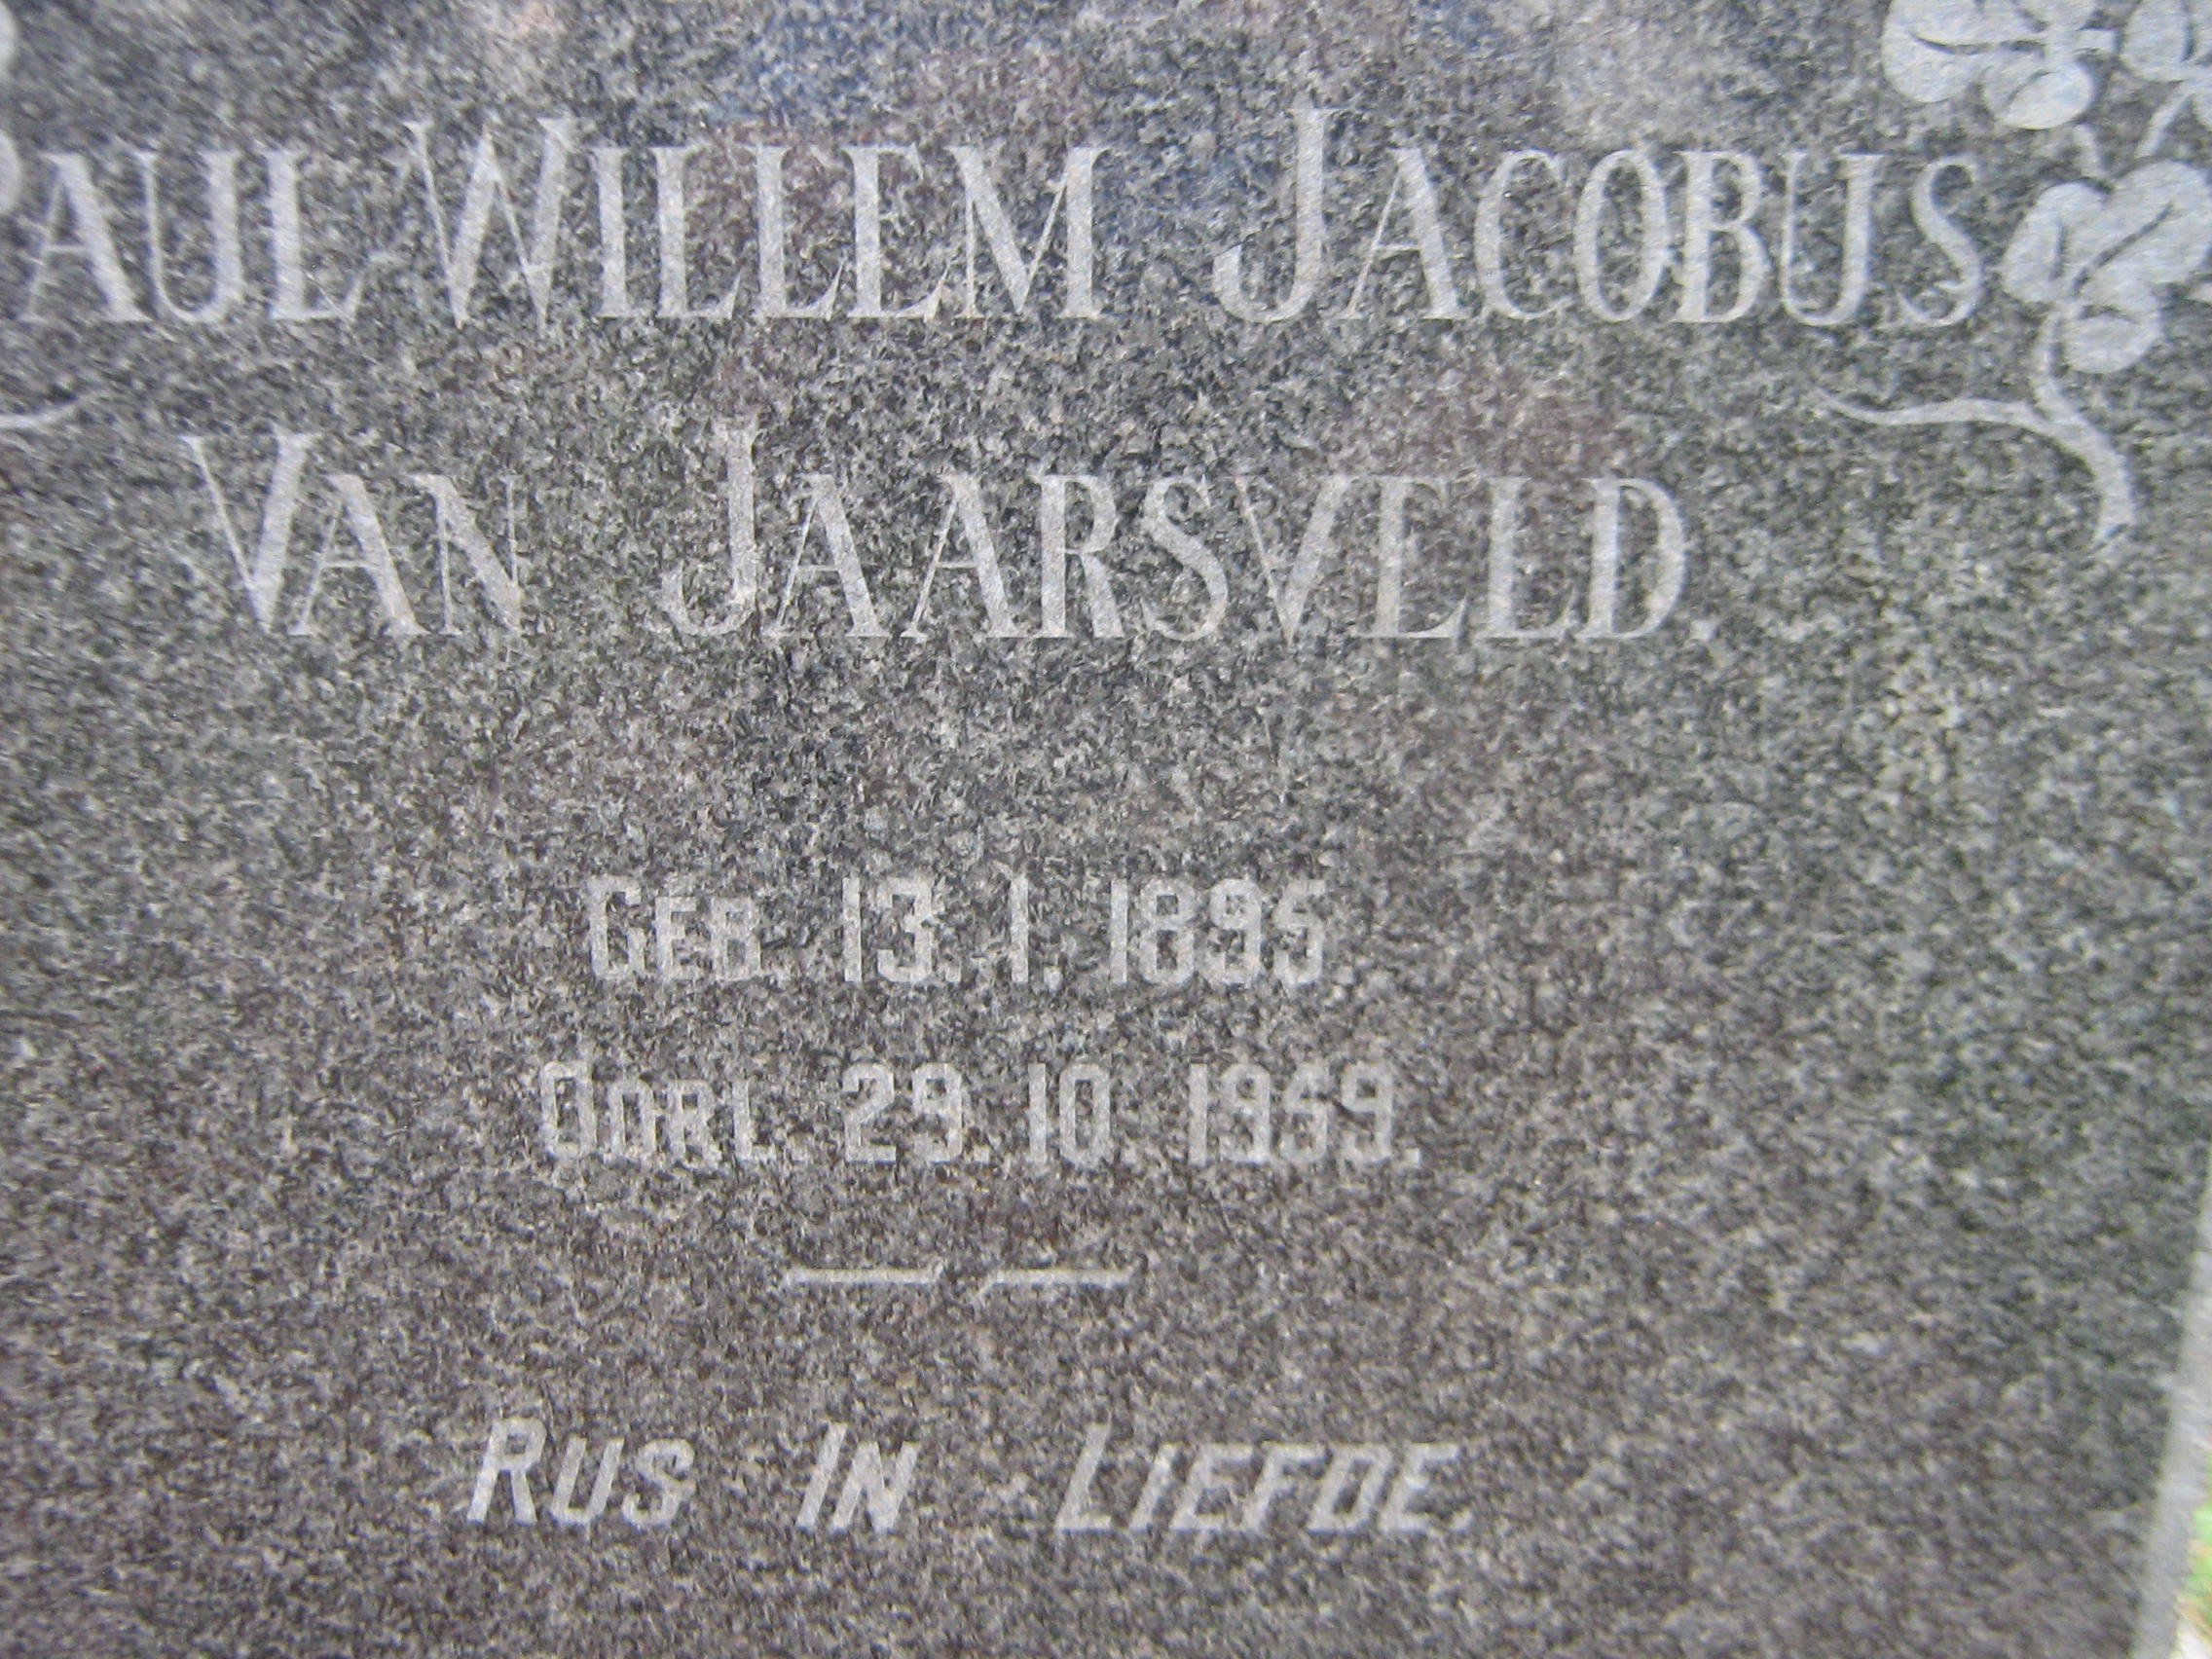 JAARSVELD Paul Willem Jacobus, van 1895-1959